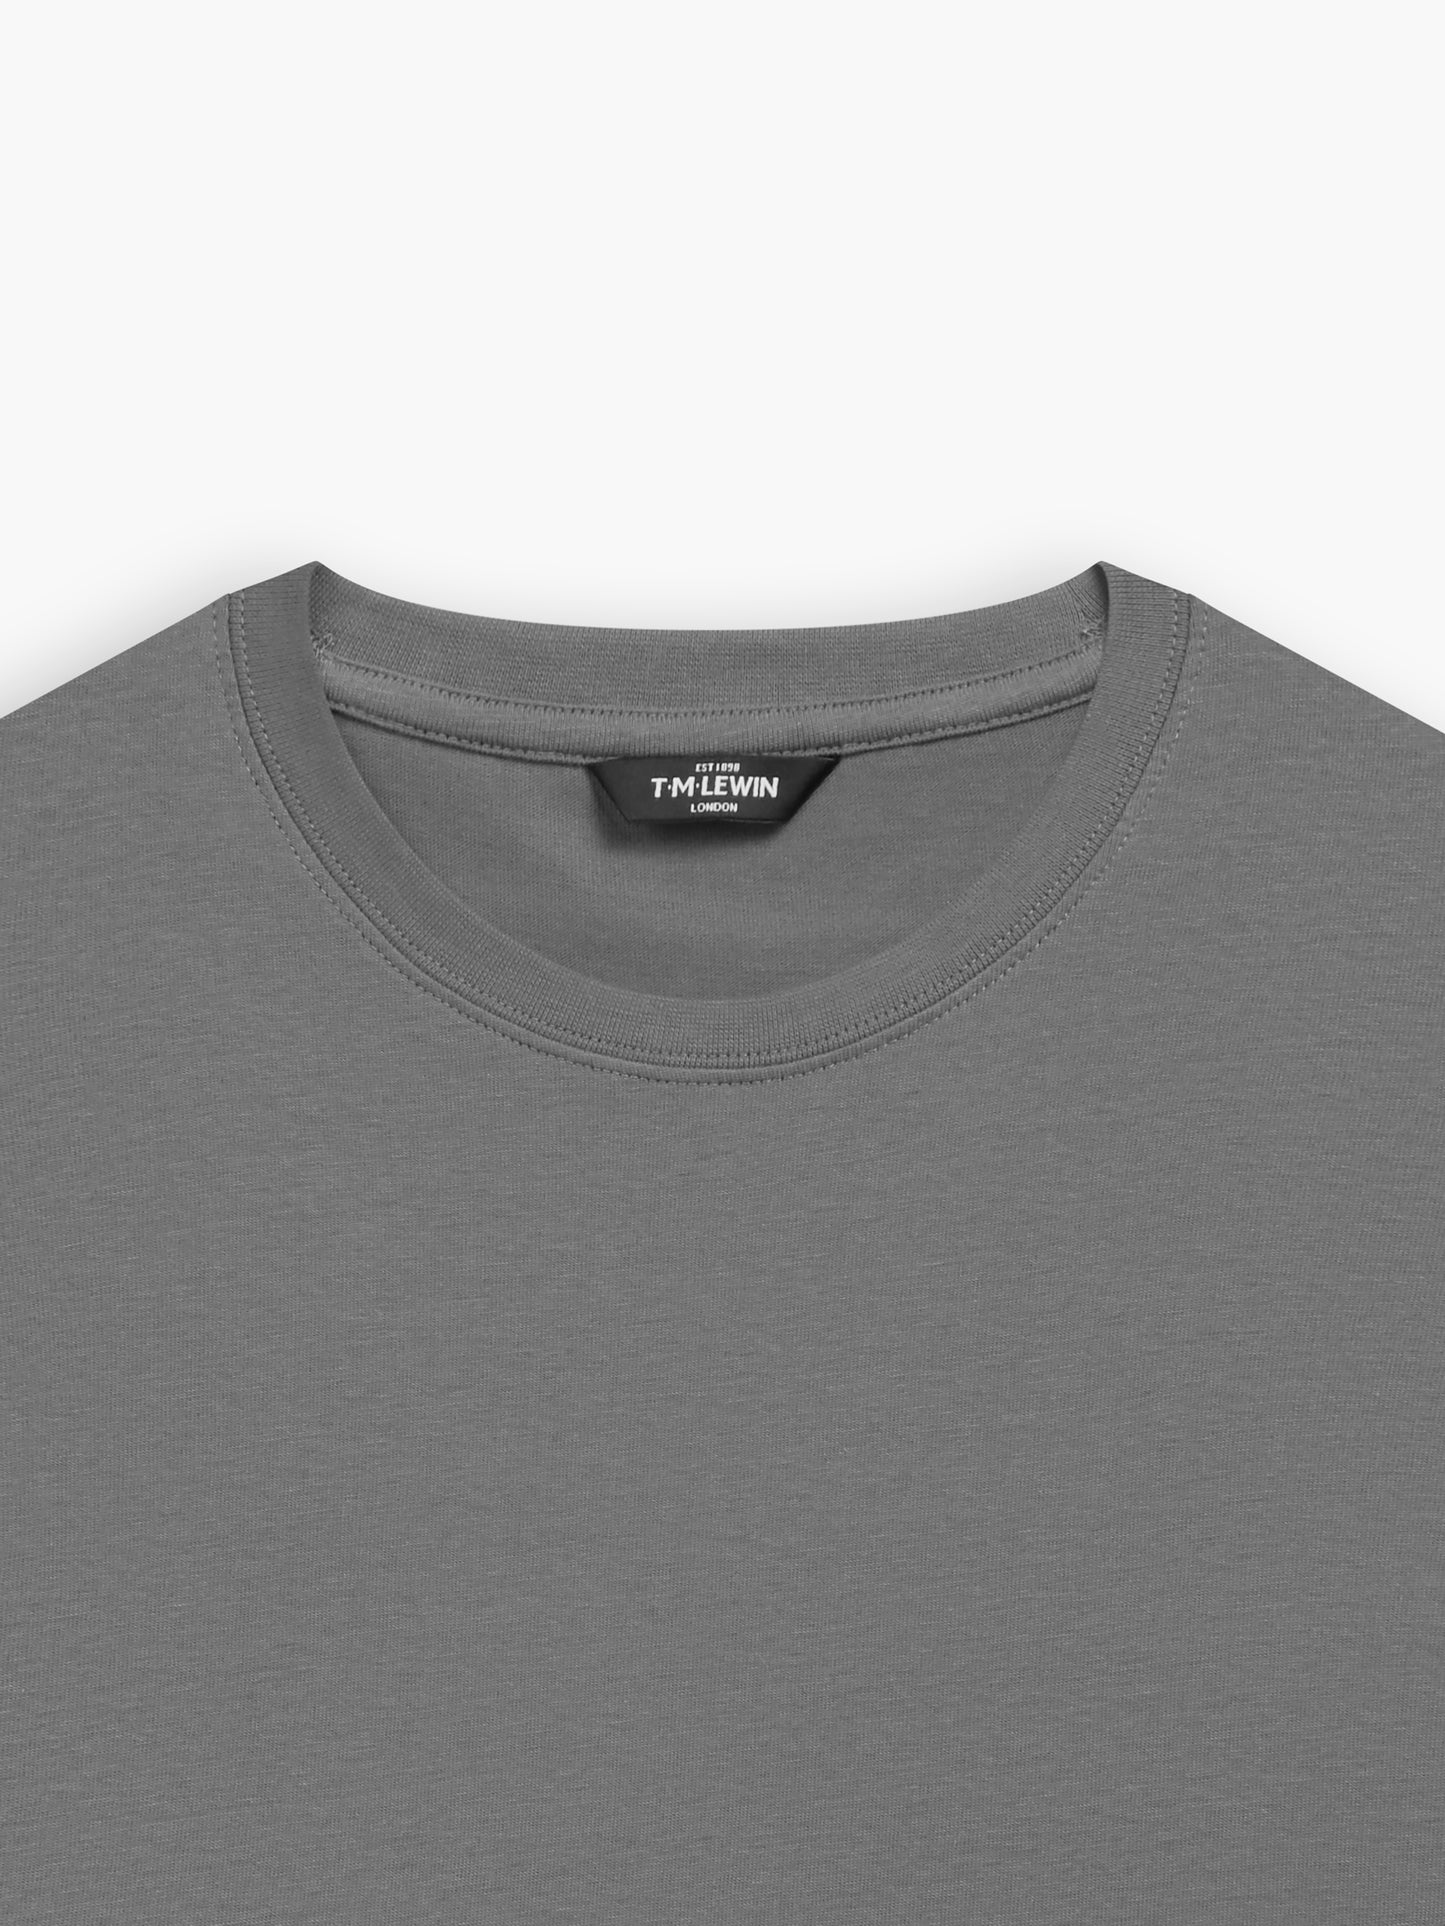 Grey Organic Cotton Crew Neck T-Shirt